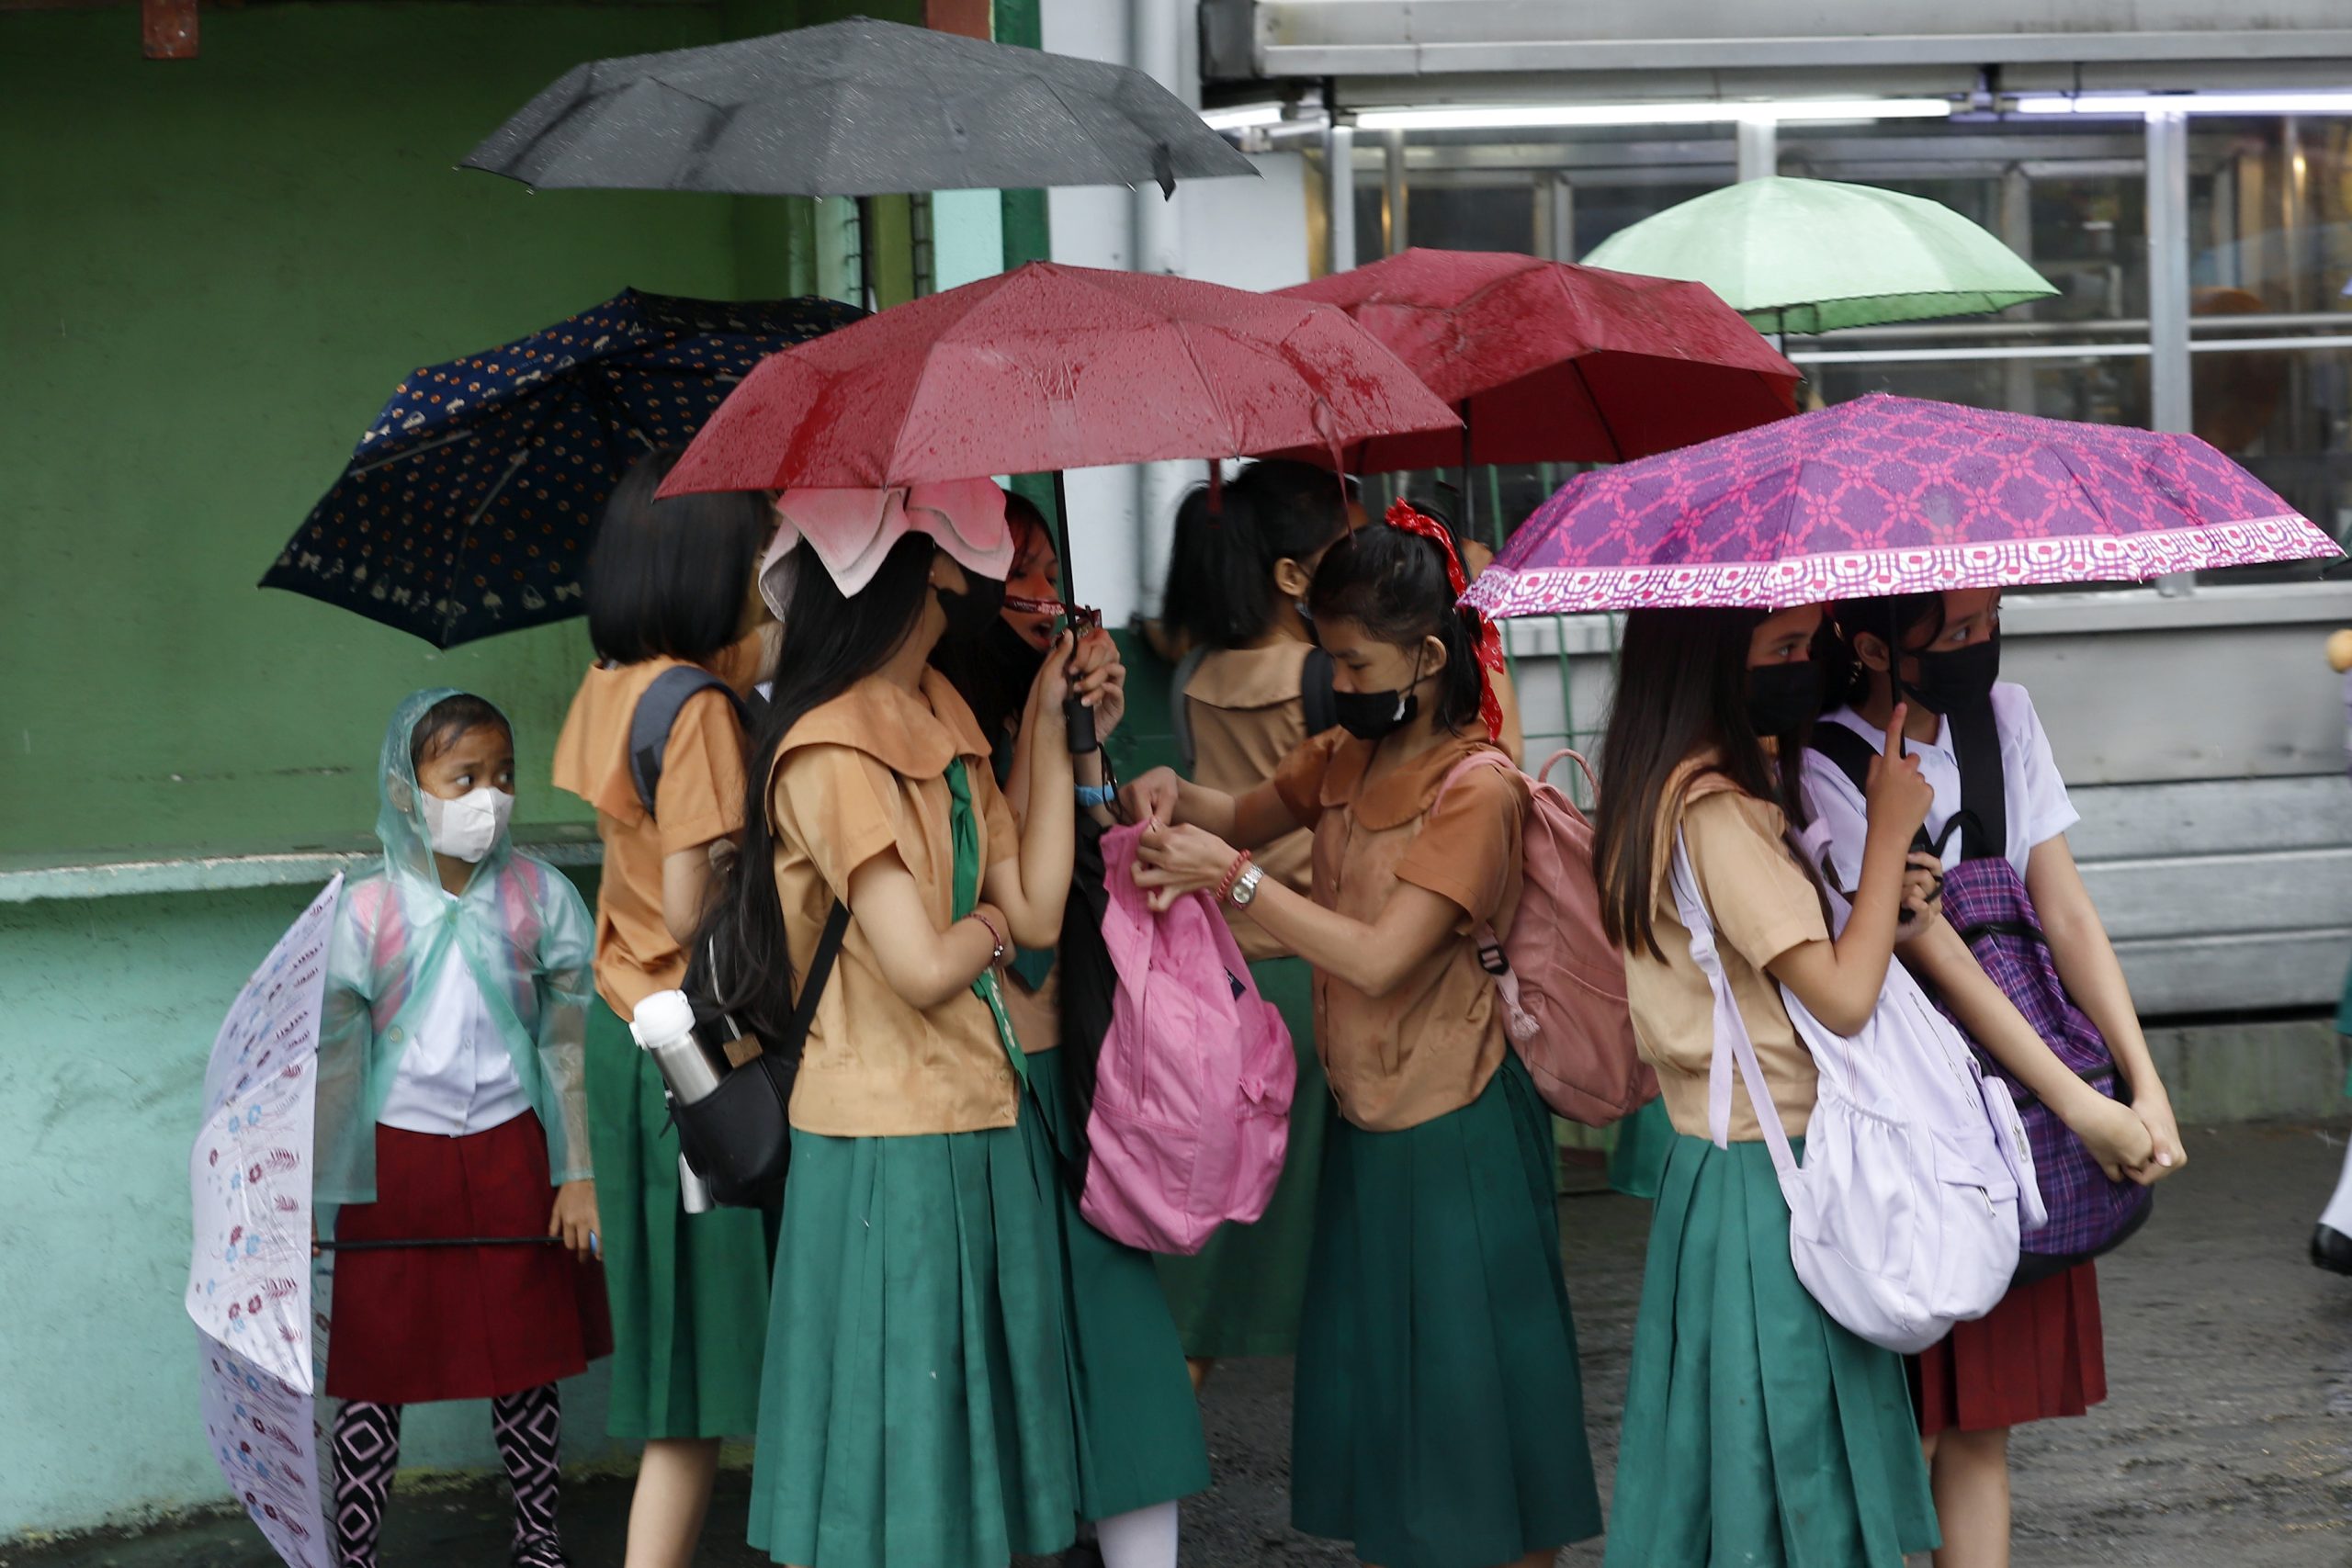 Students using umbrellas